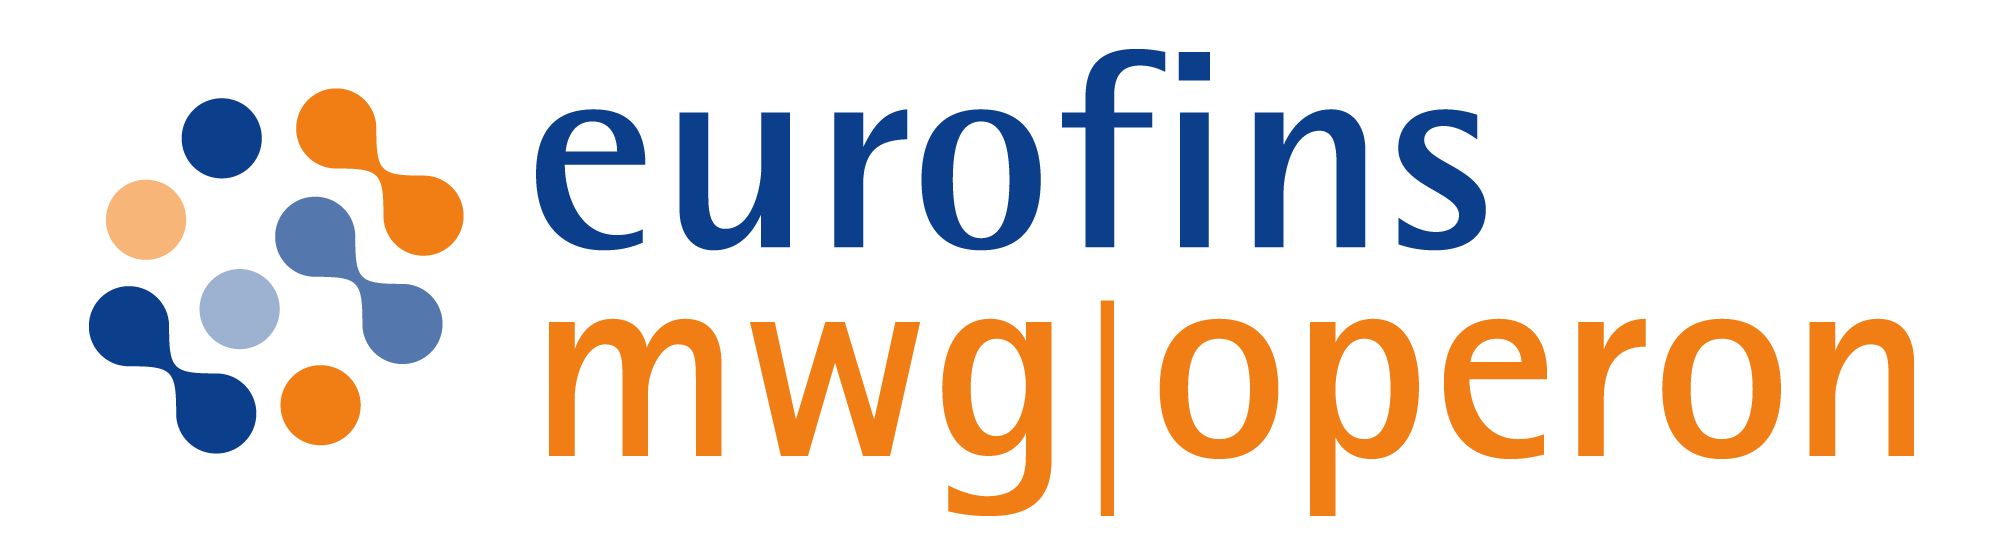 Logo EurofinsMWGOperon.jpg